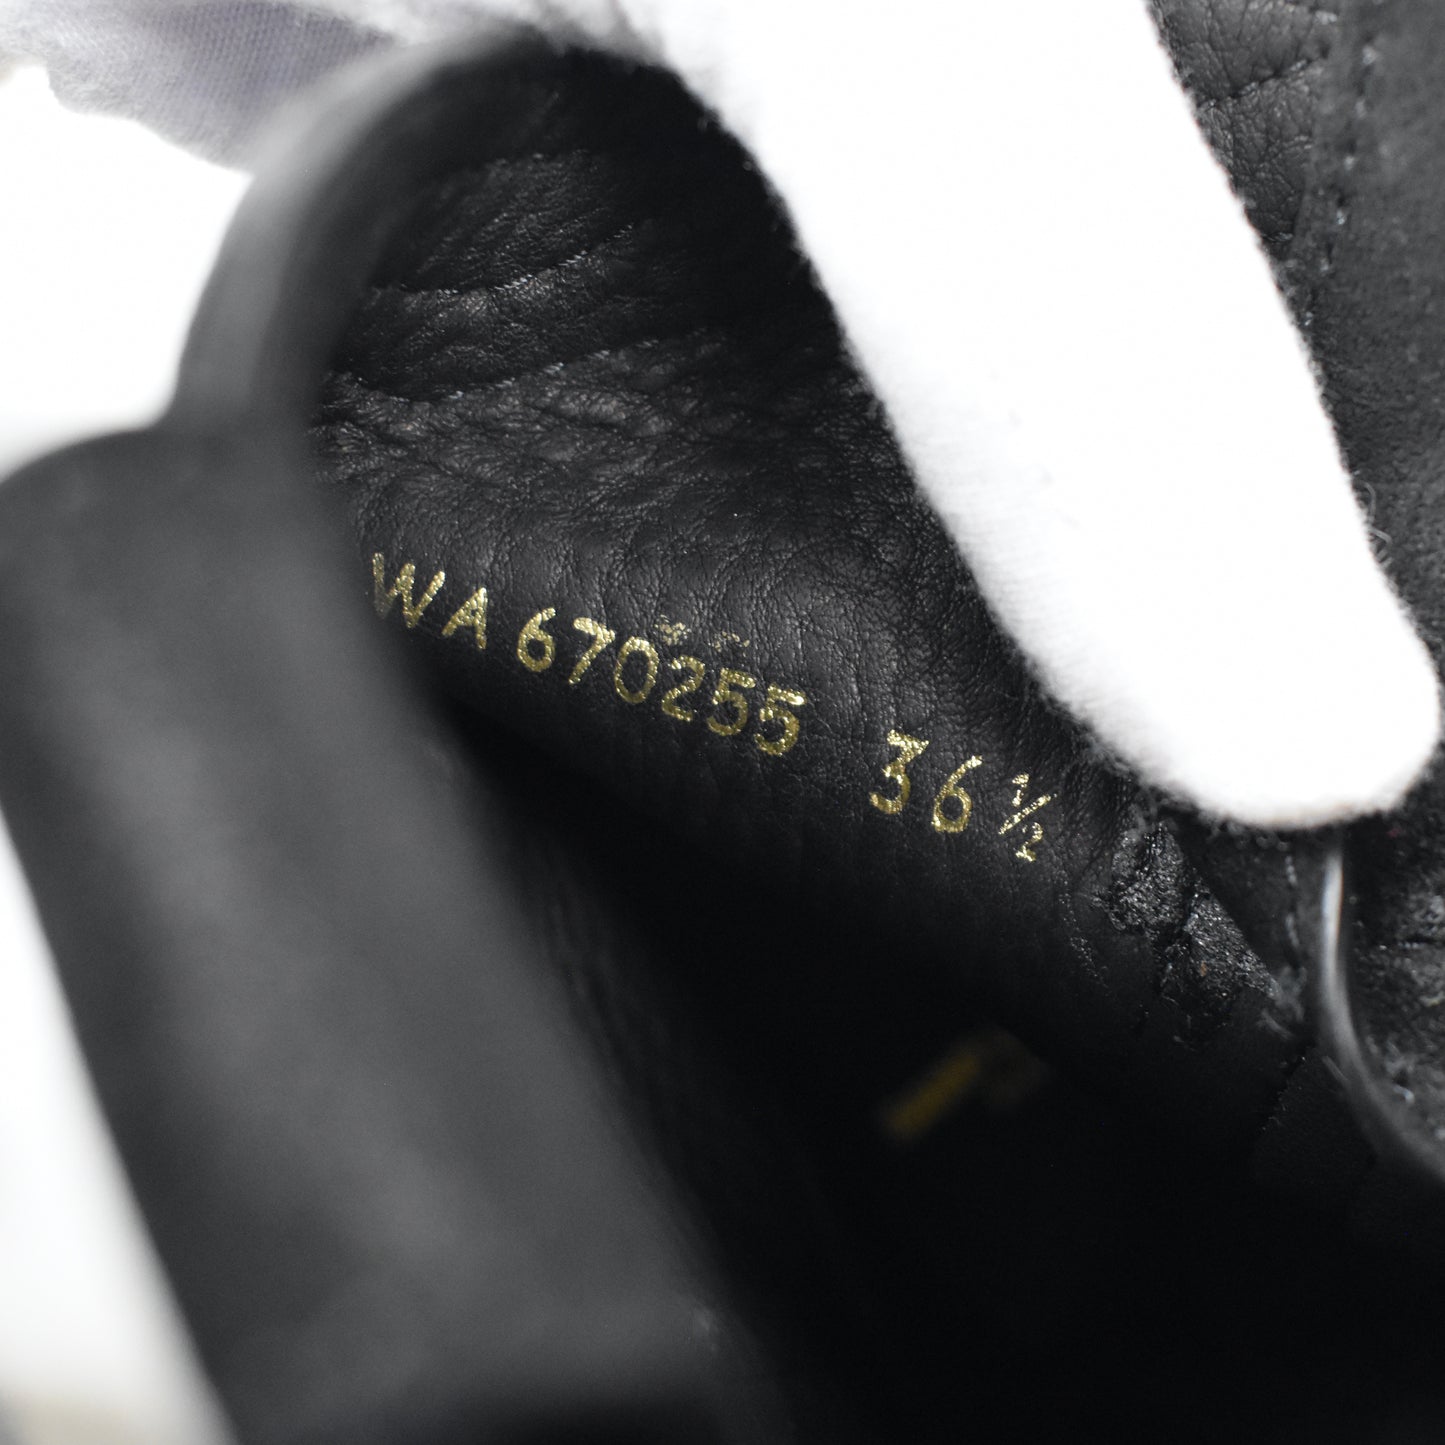 Saint Laurent - Black Waxed Suede Eastwood Boots (Women's)